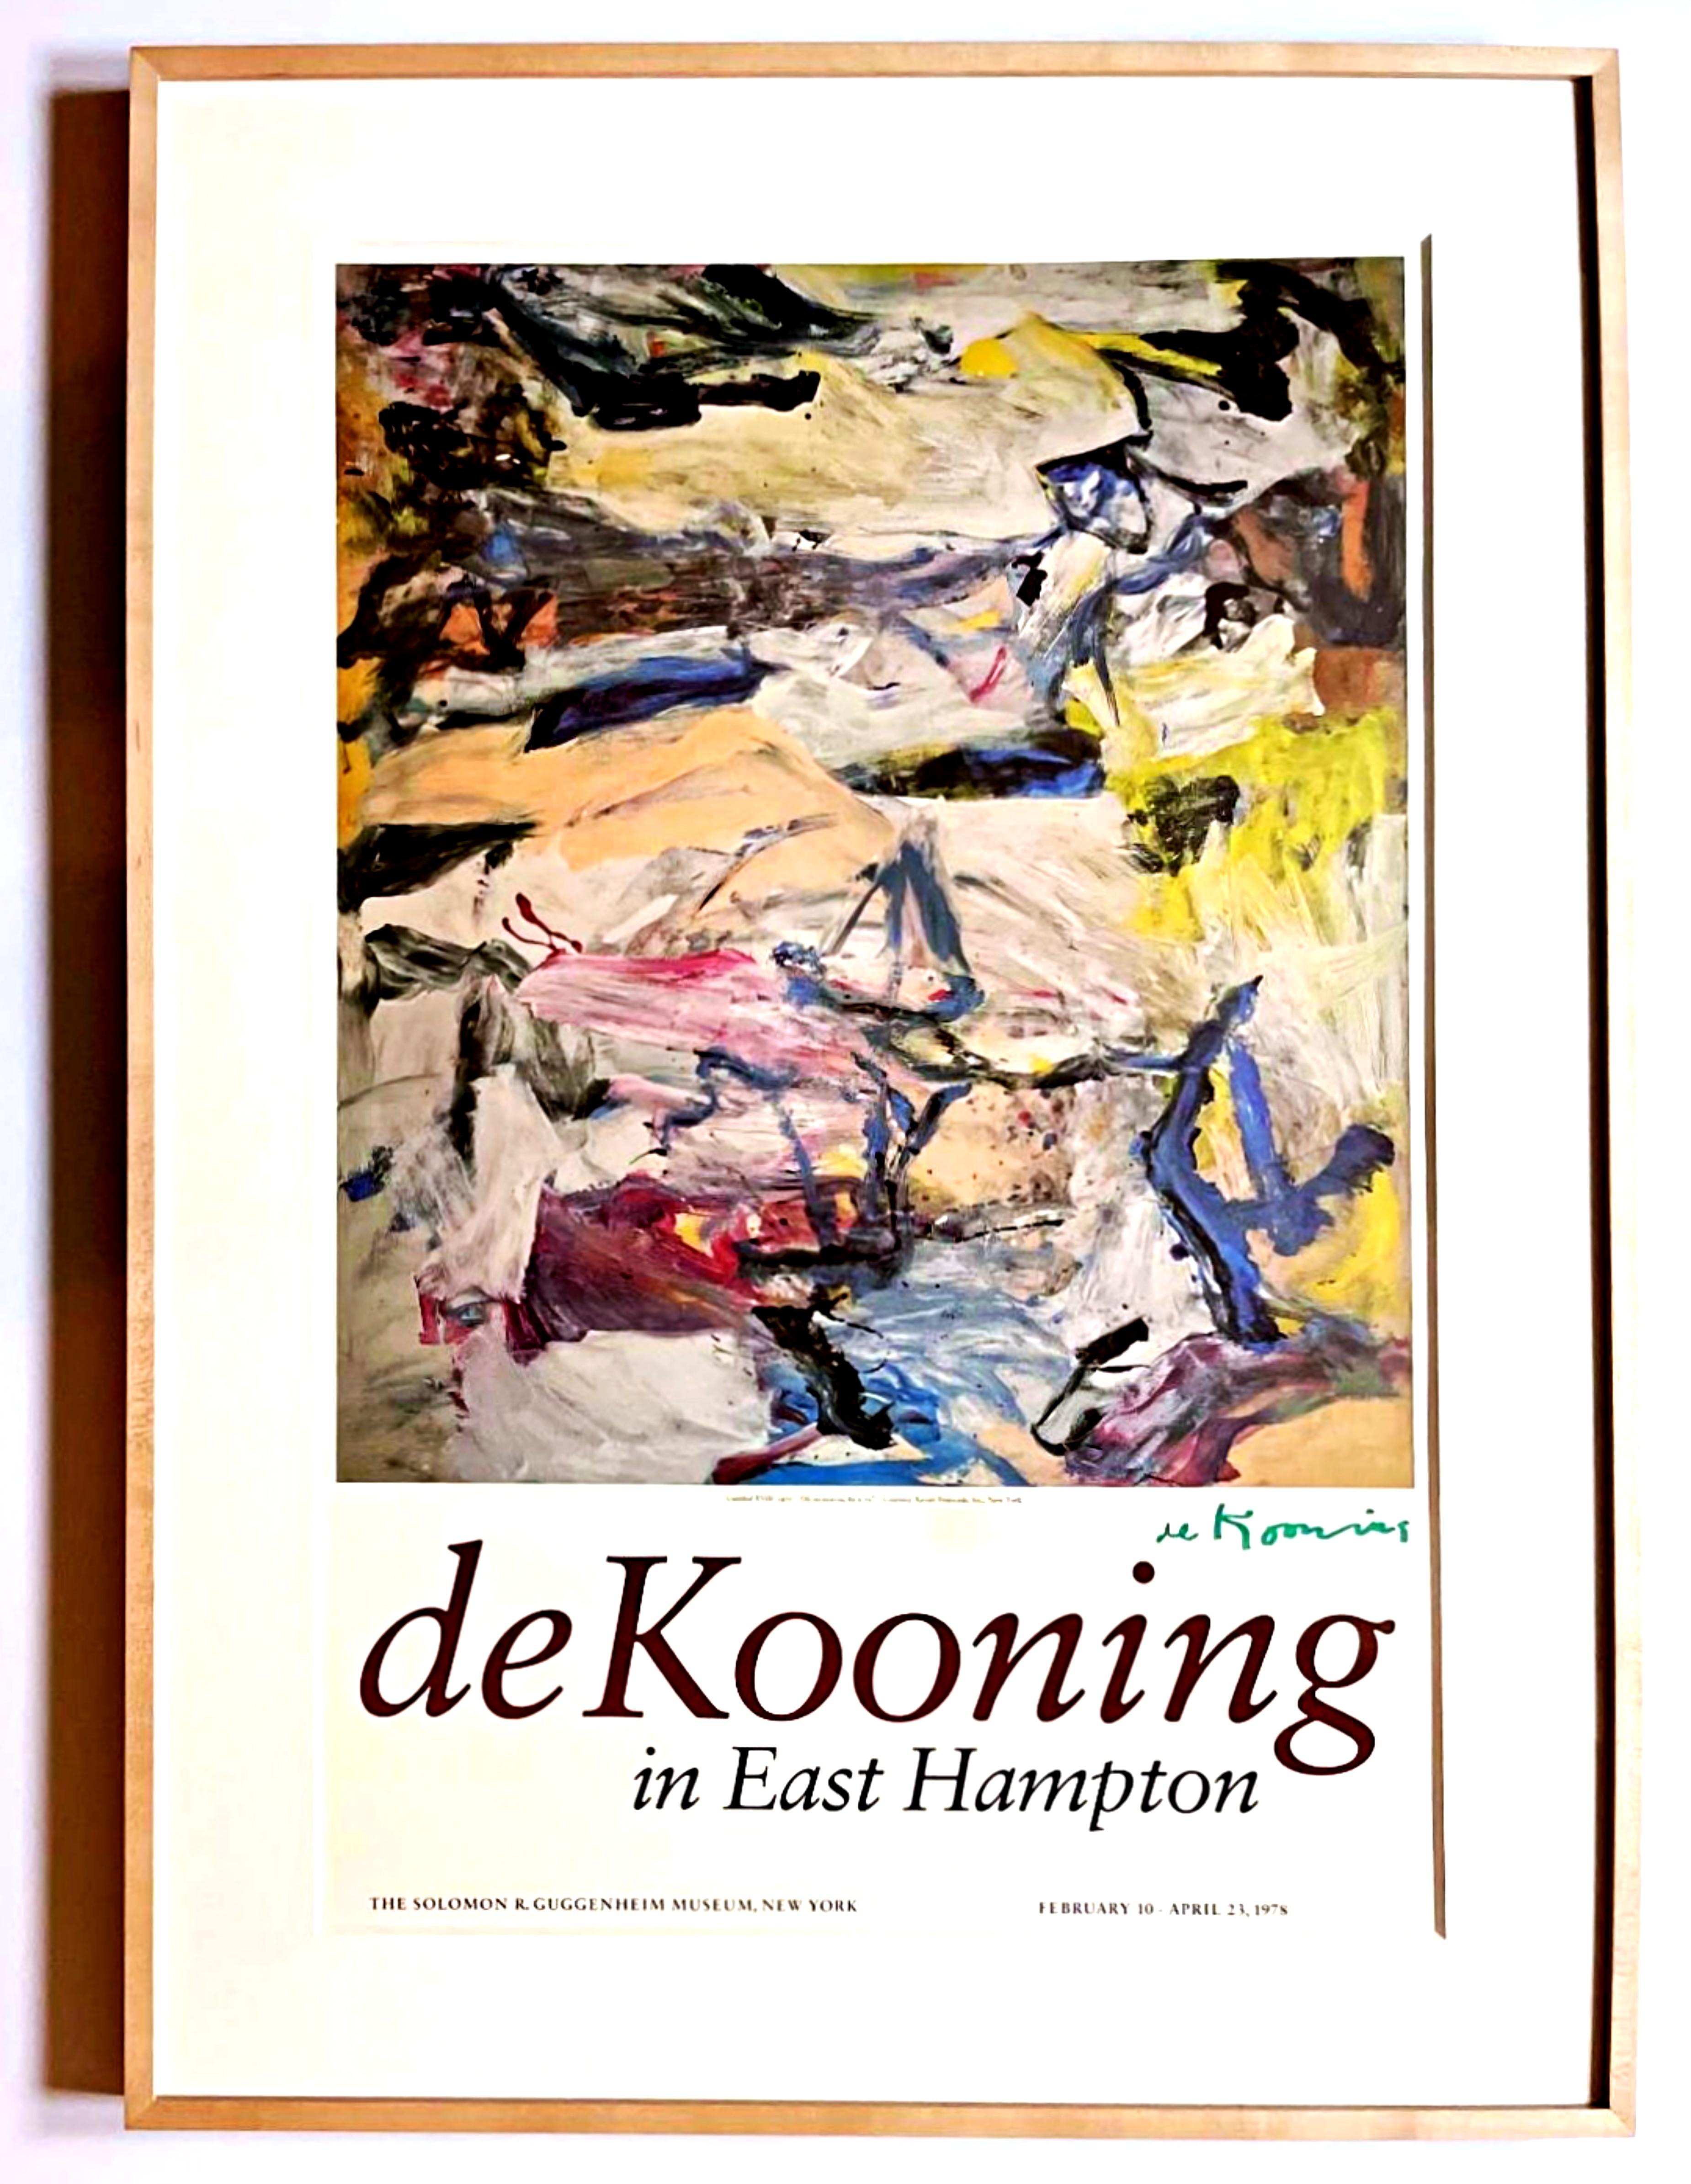 Willem de Kooning Abstract Print - de Kooning in East Hampton (Hand Signed), from Estate of Alan York